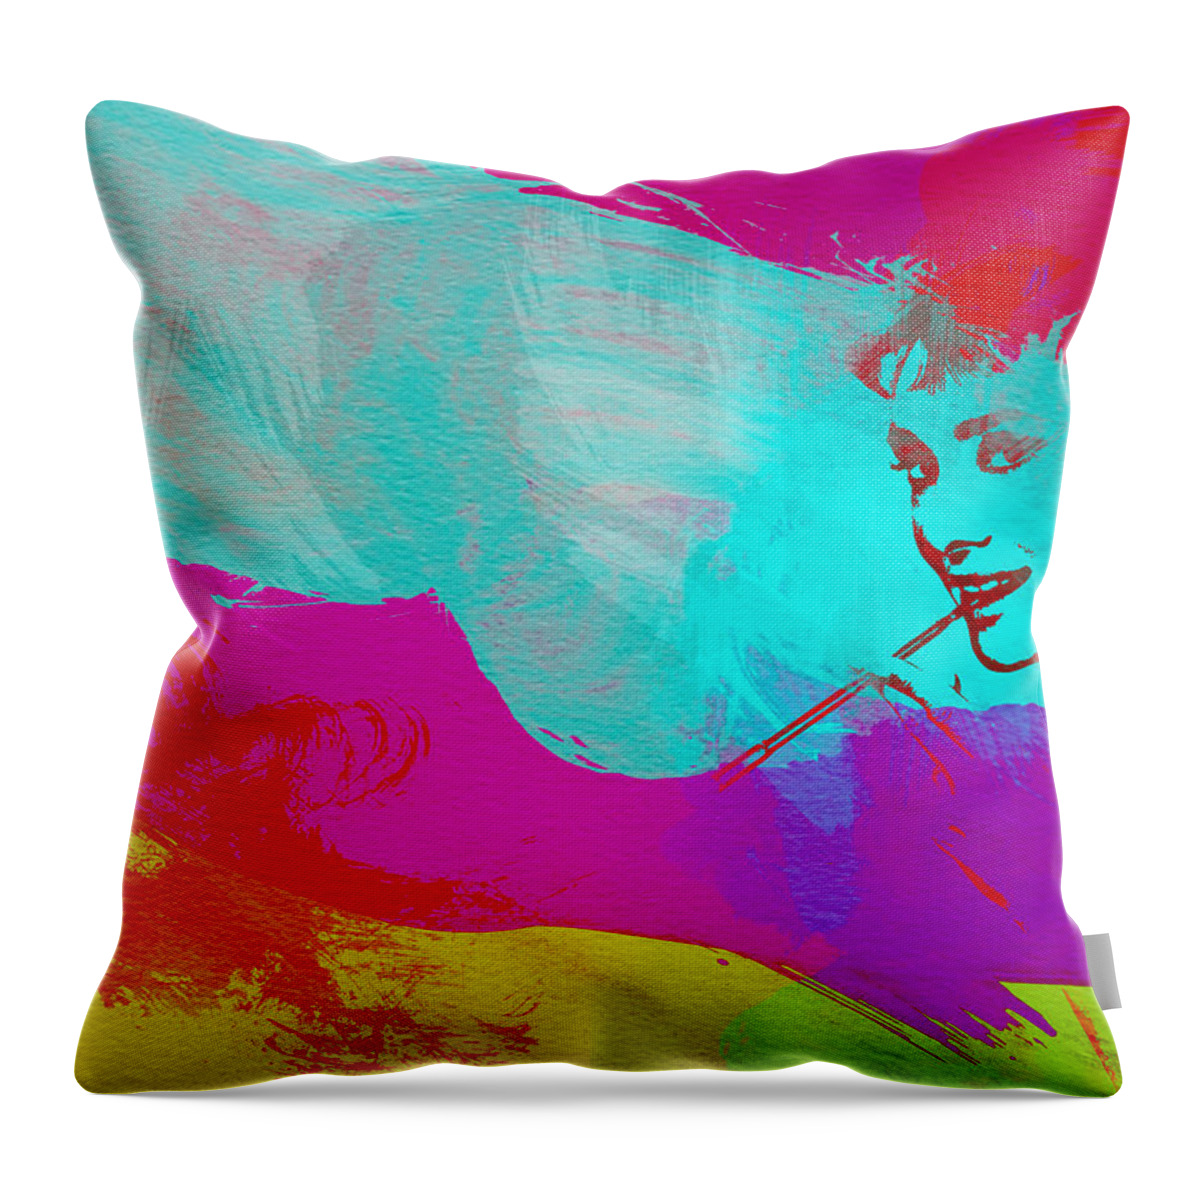 Audrey Hepburn Throw Pillow featuring the painting Audrey Hepburn by Naxart Studio